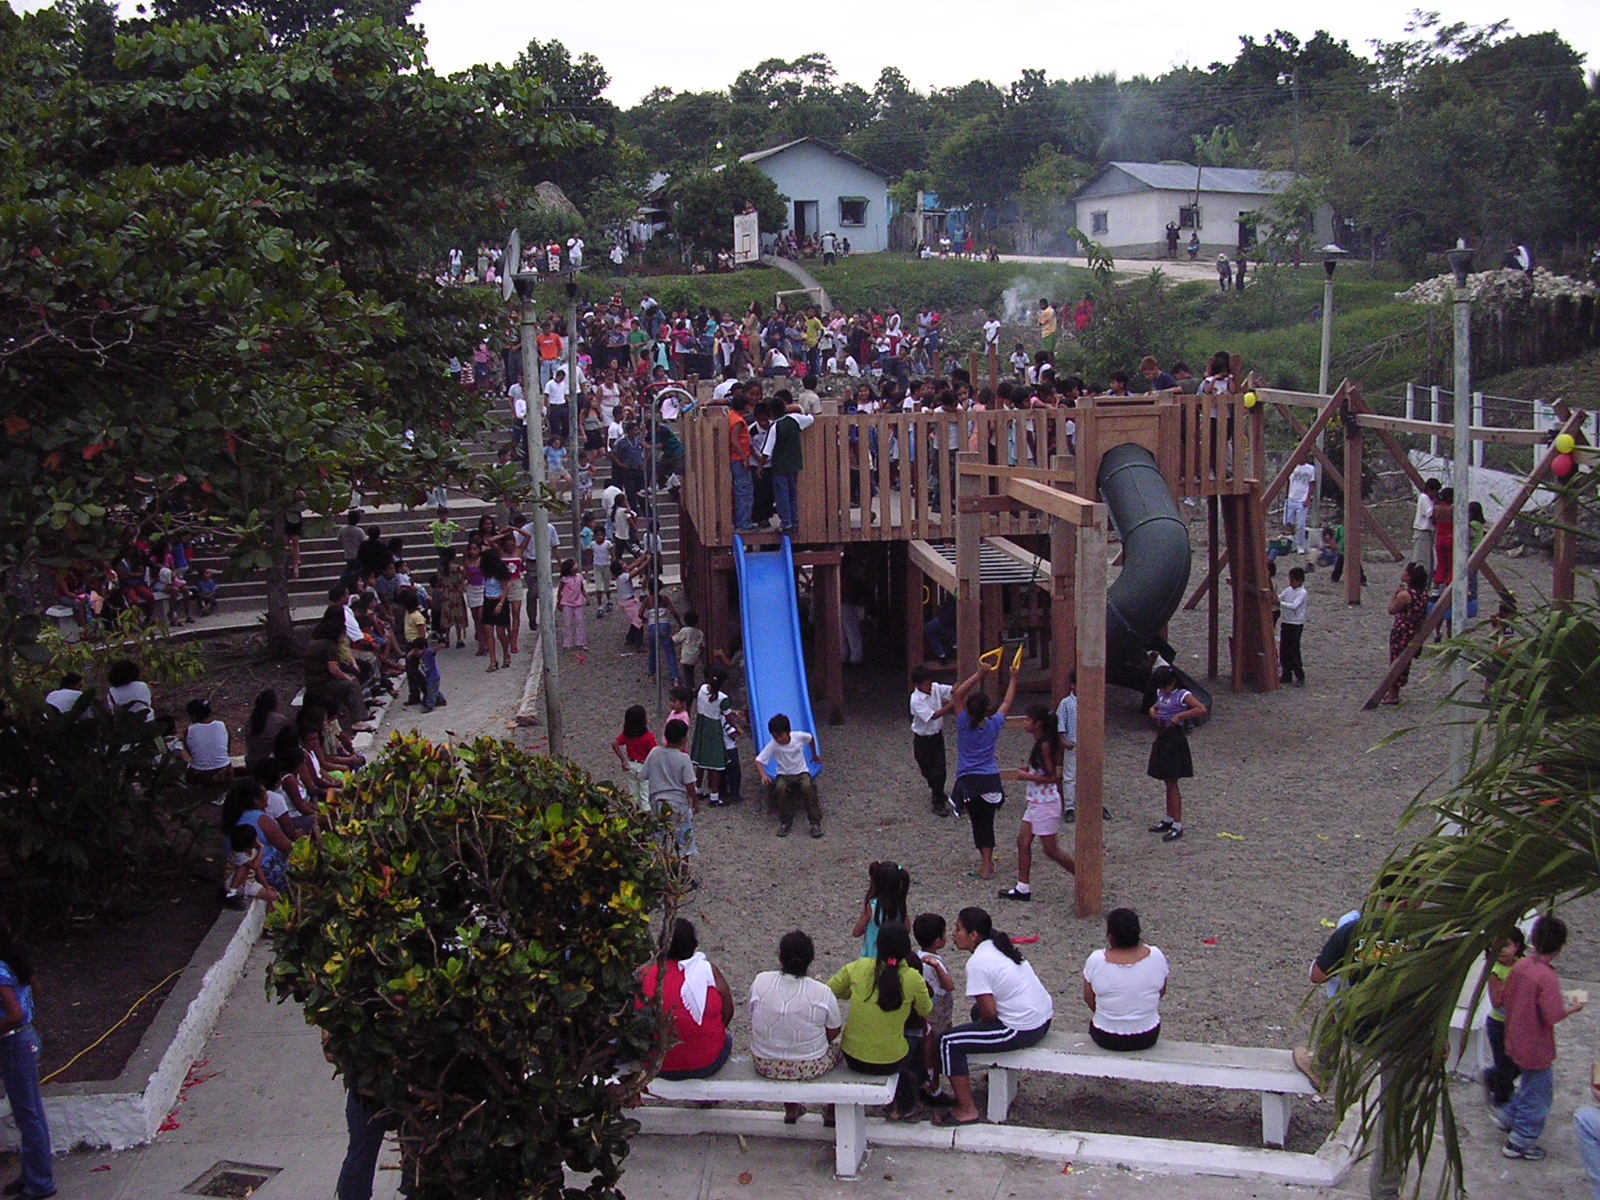 Hundreds of children frolic in the Carlos Soza Manzanero playground in San Andrés, Guatemala.